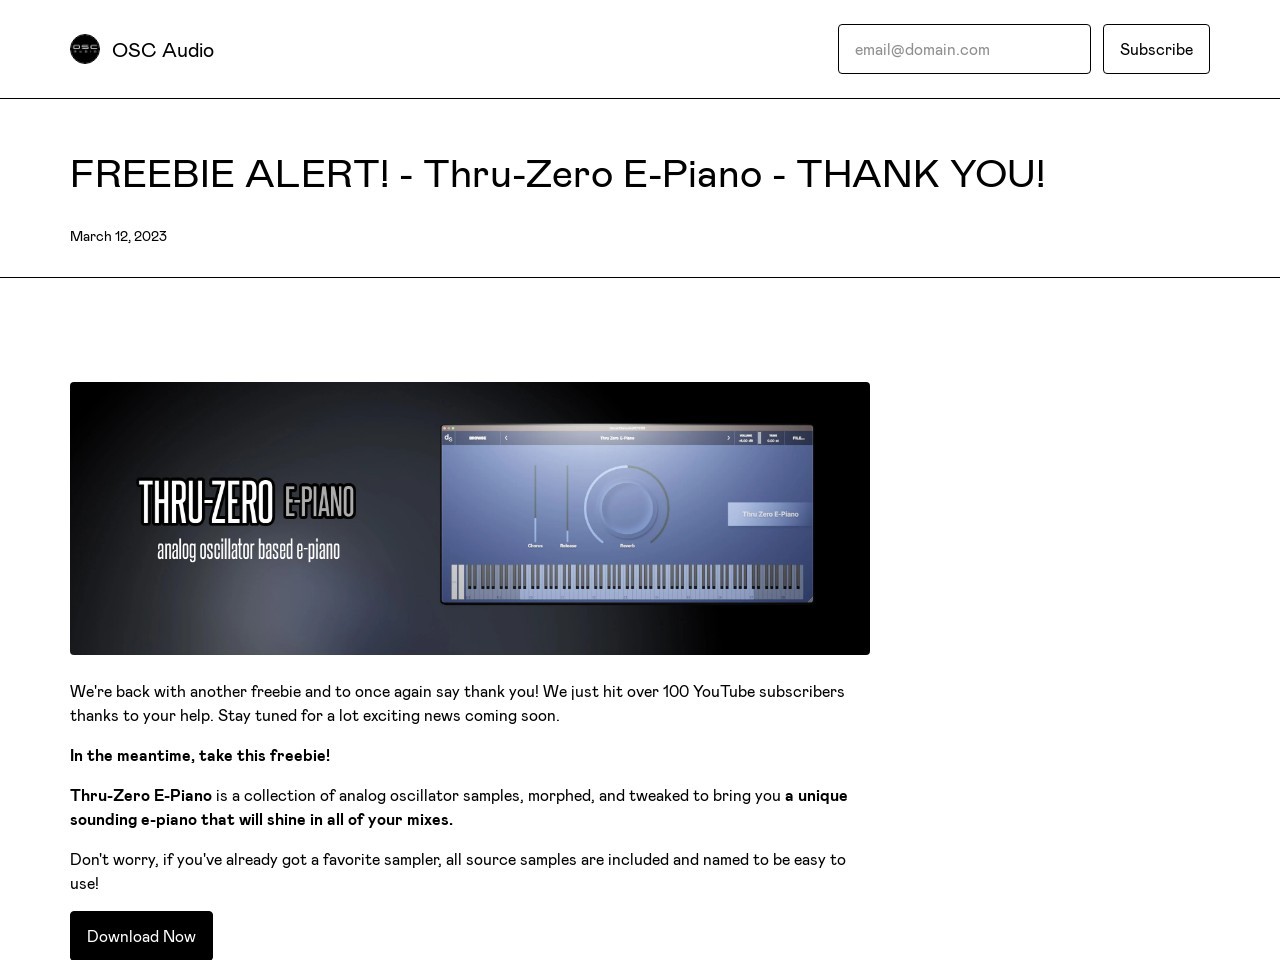 FREEBIE ALERT! - Thru-Zero E-Piano - THANK YOU! - OSC Audio